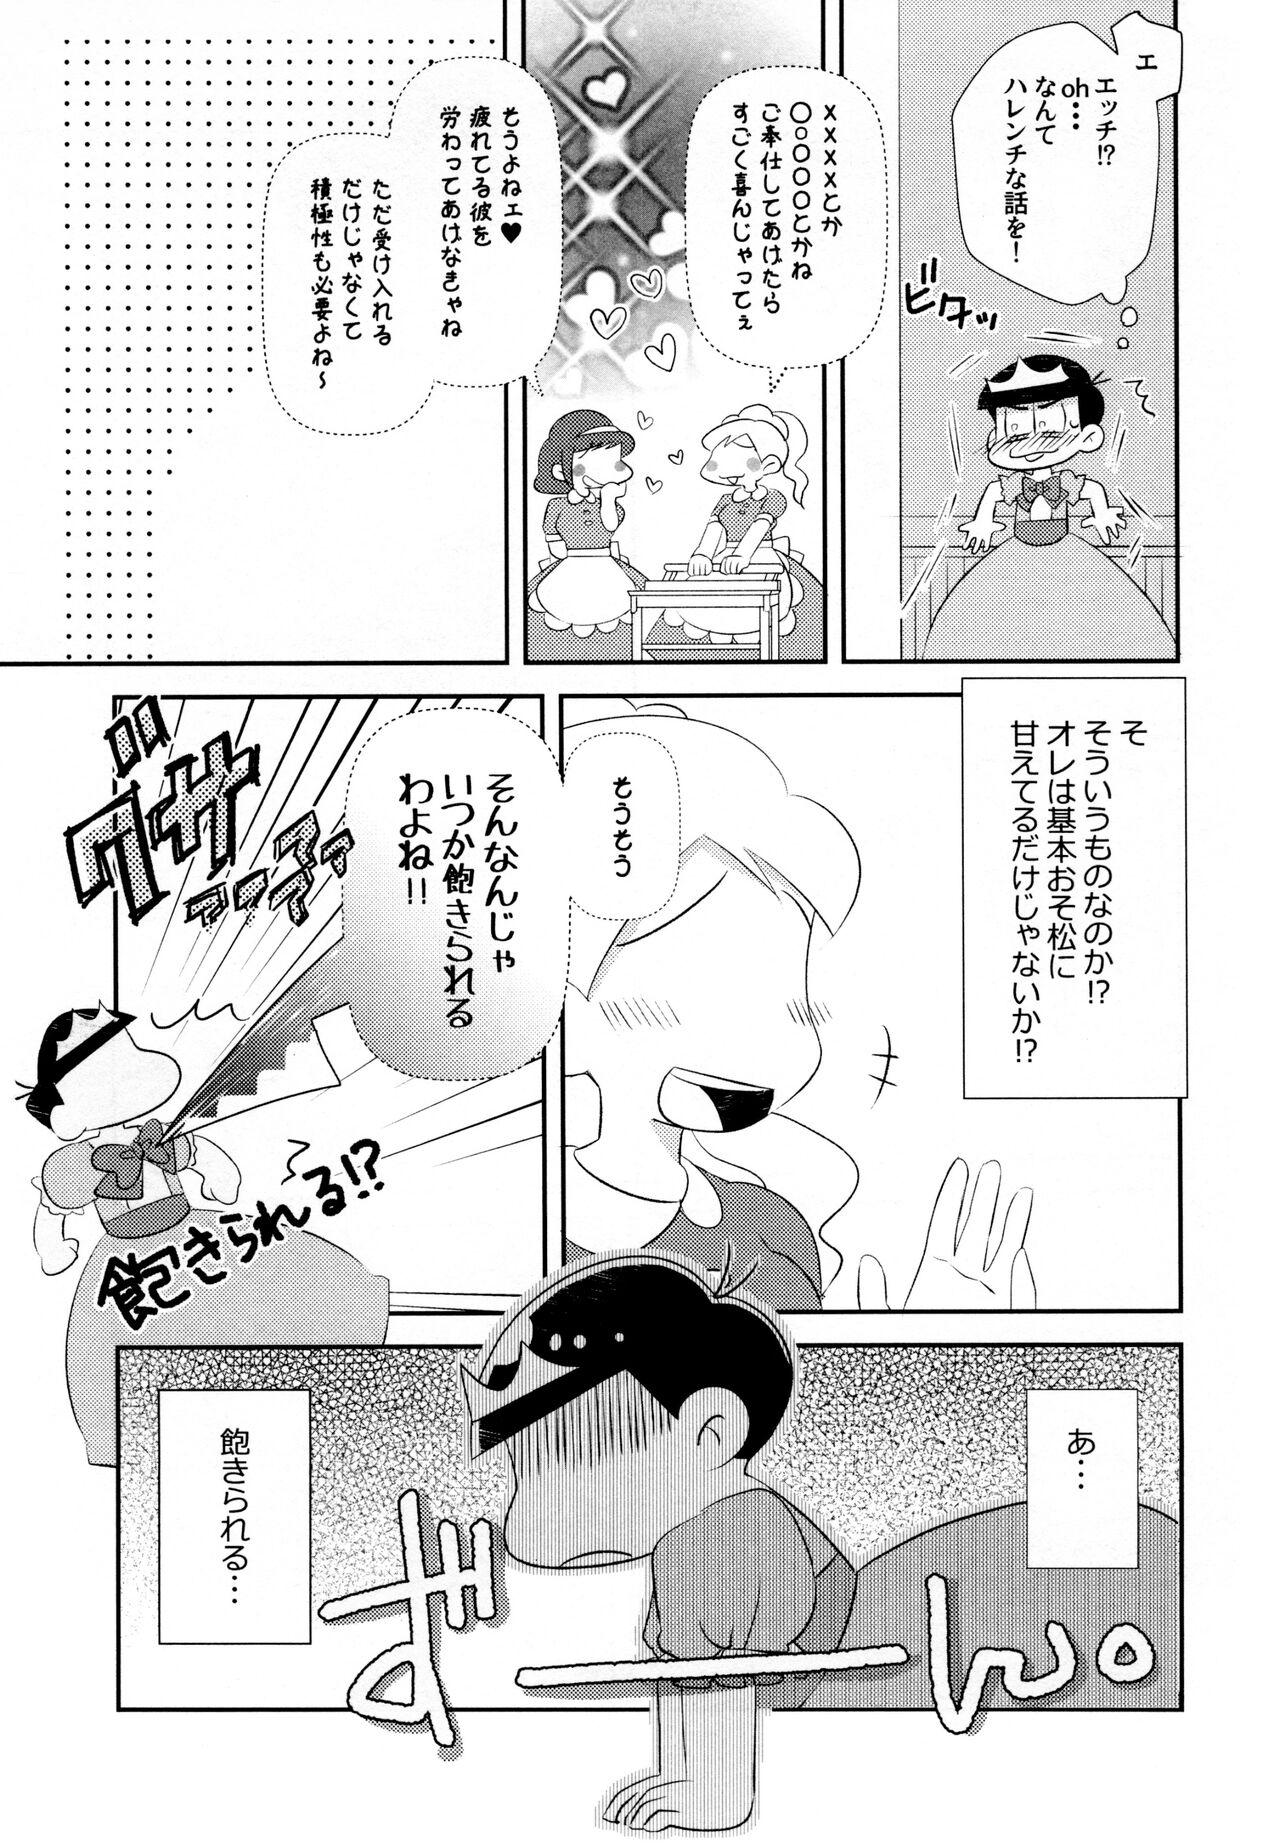 Nut Horo yoi Night - Osomatsu san Fishnet - Page 6